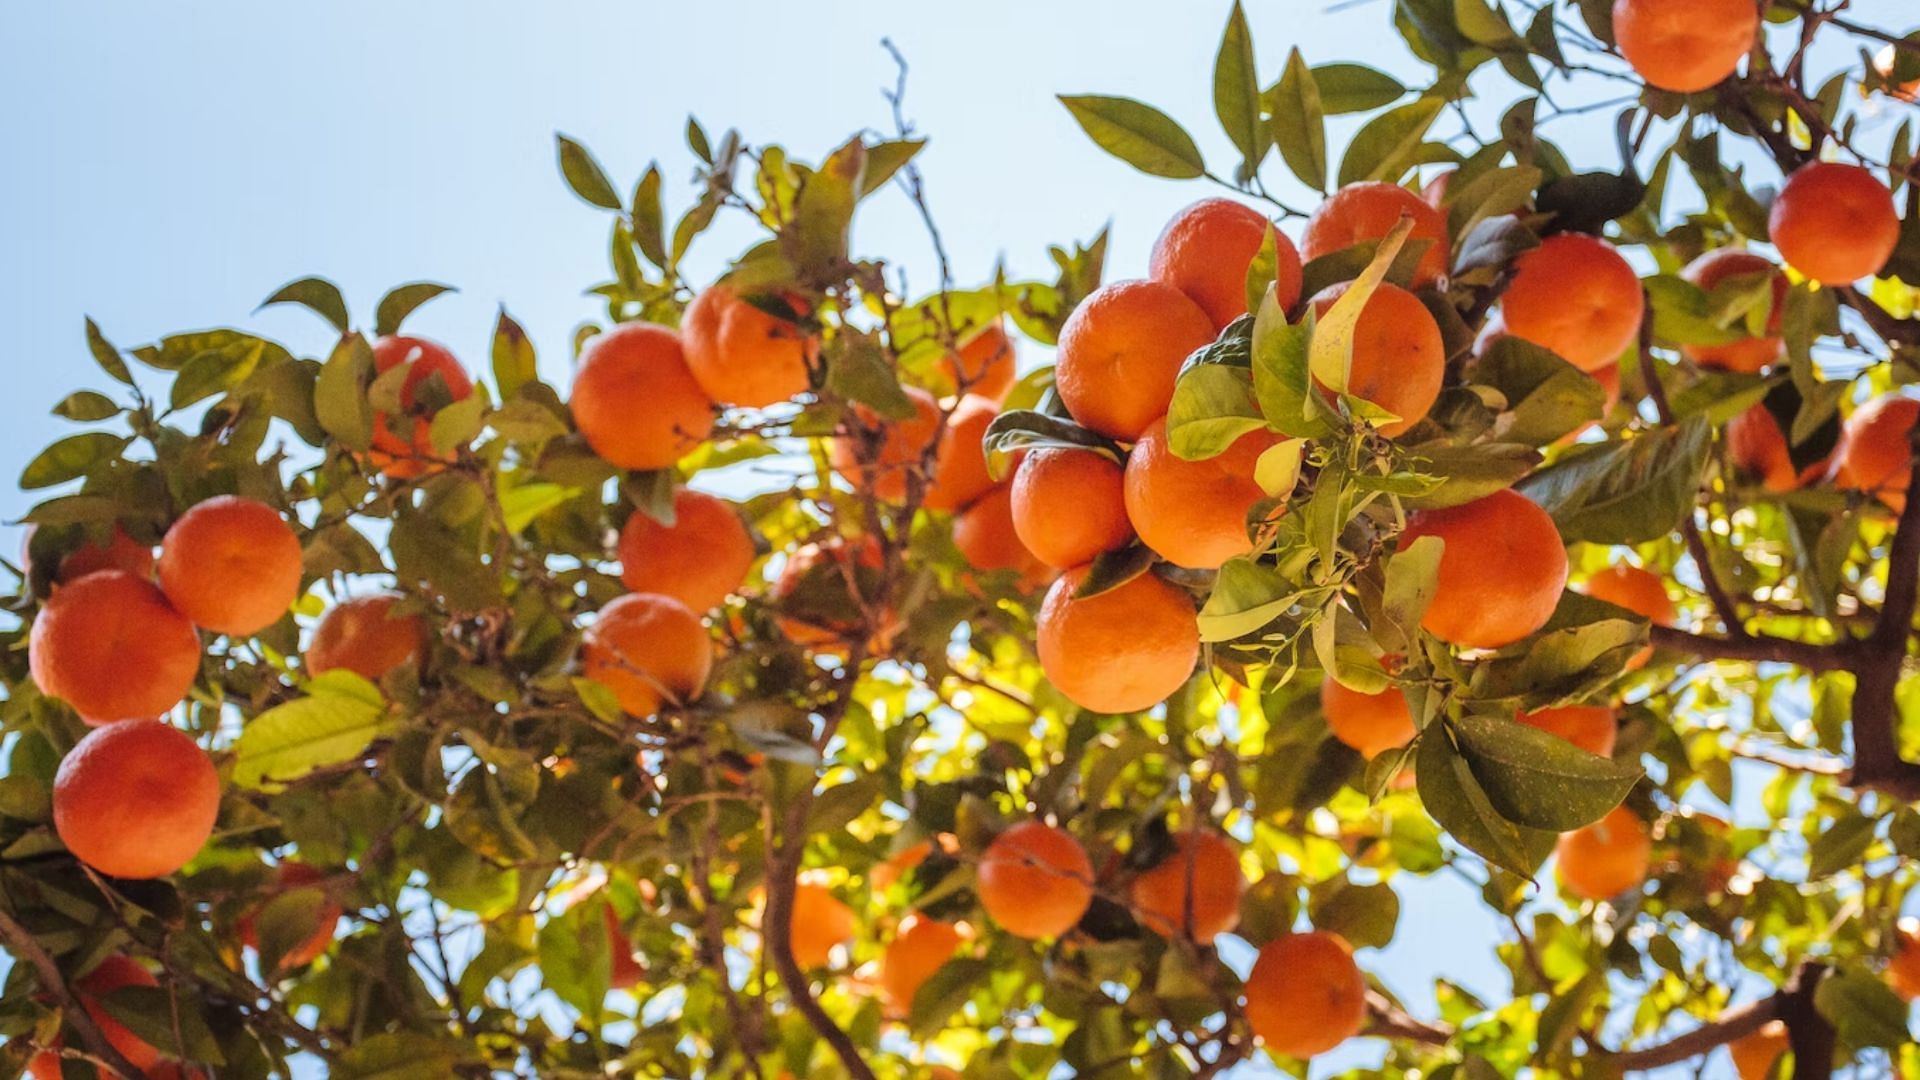 oranges, limes, lemons, grapefruits, and other citrus plants may be affected by psyllids (Image via Jonny James/Unsplash)